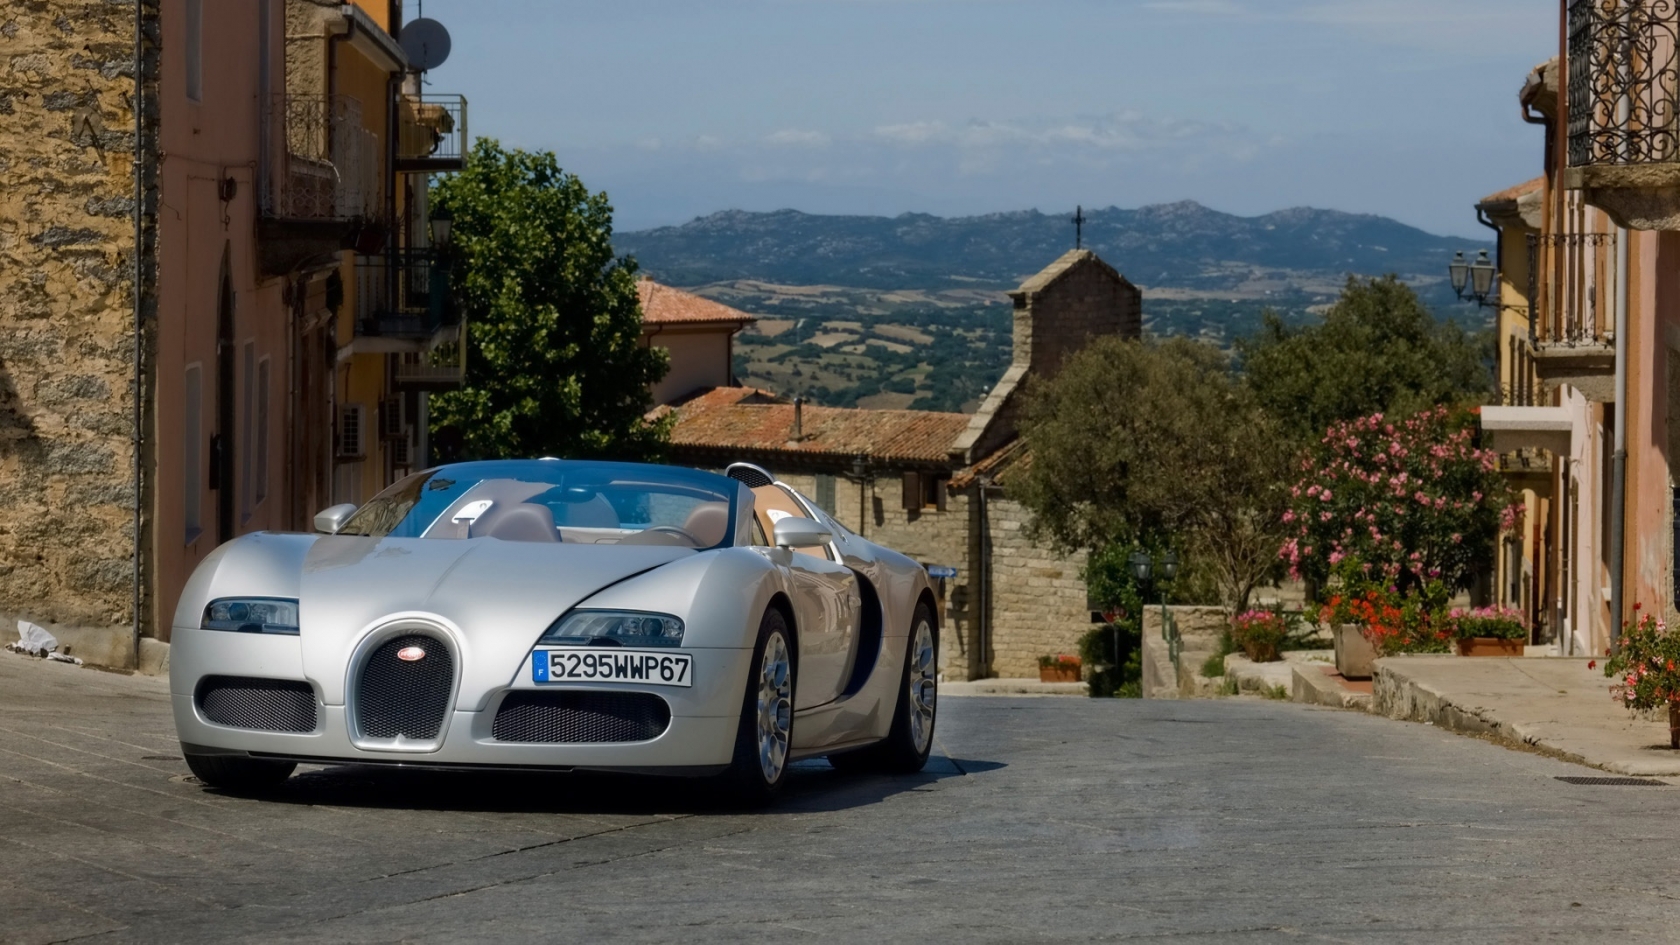 Bugatti Veyron 16.4 Grand Sport 2010 in Sardinia - Front Angle for 1680 x 945 HDTV resolution